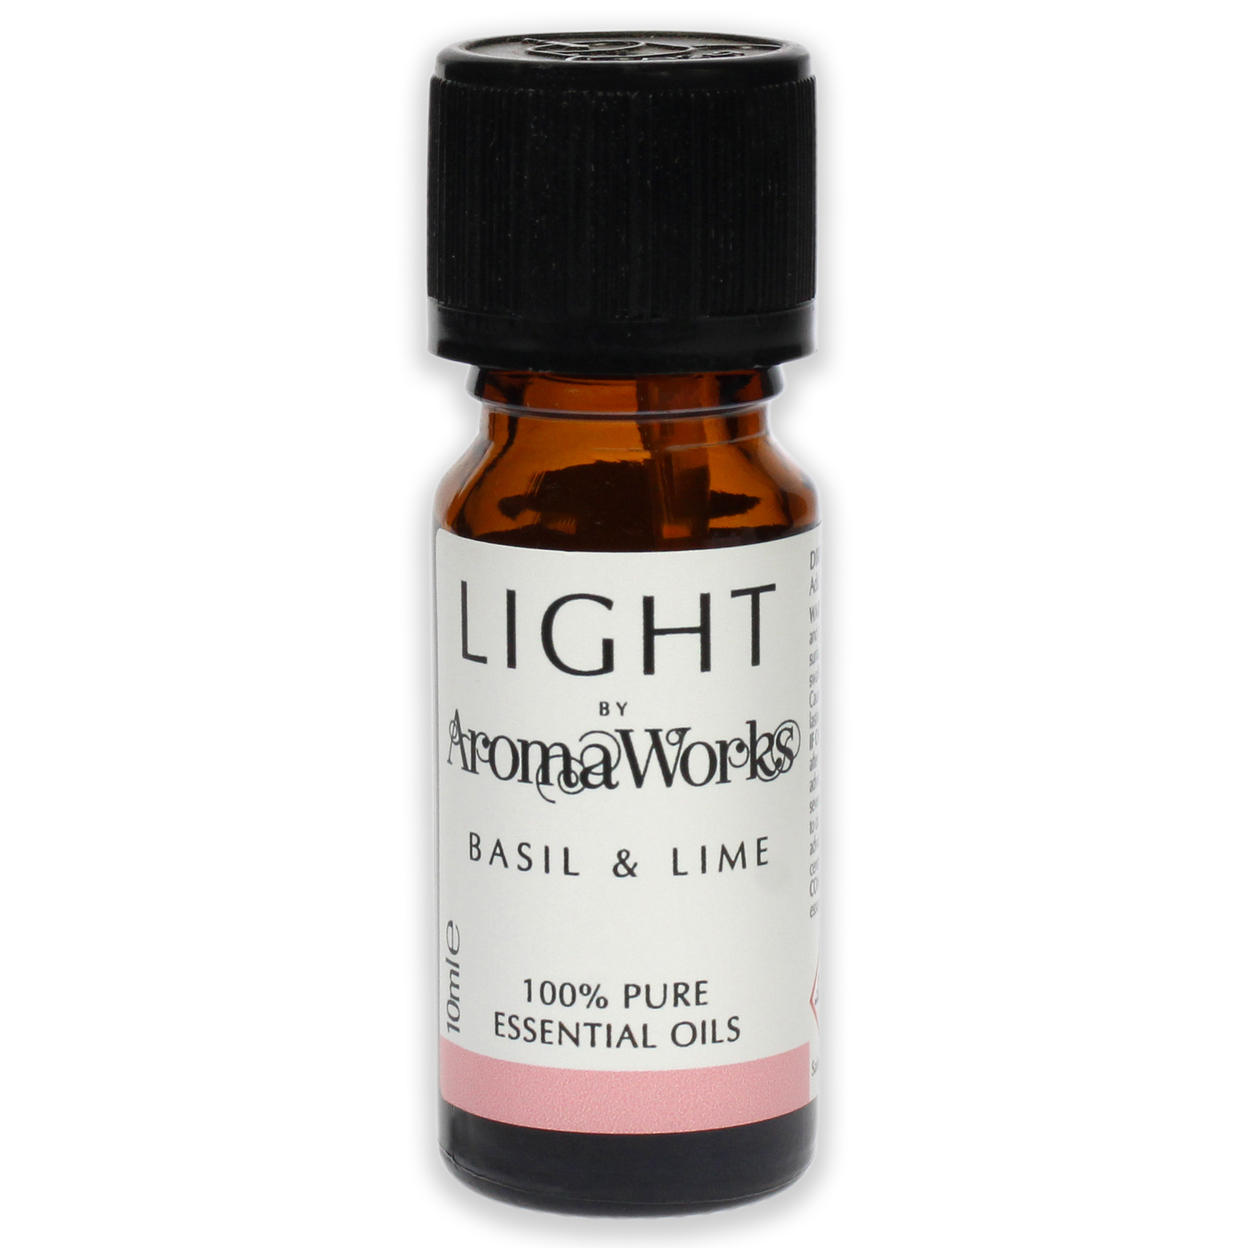 Aromaworks Light Essential Oil - Basil And Lime 0.33 Oz